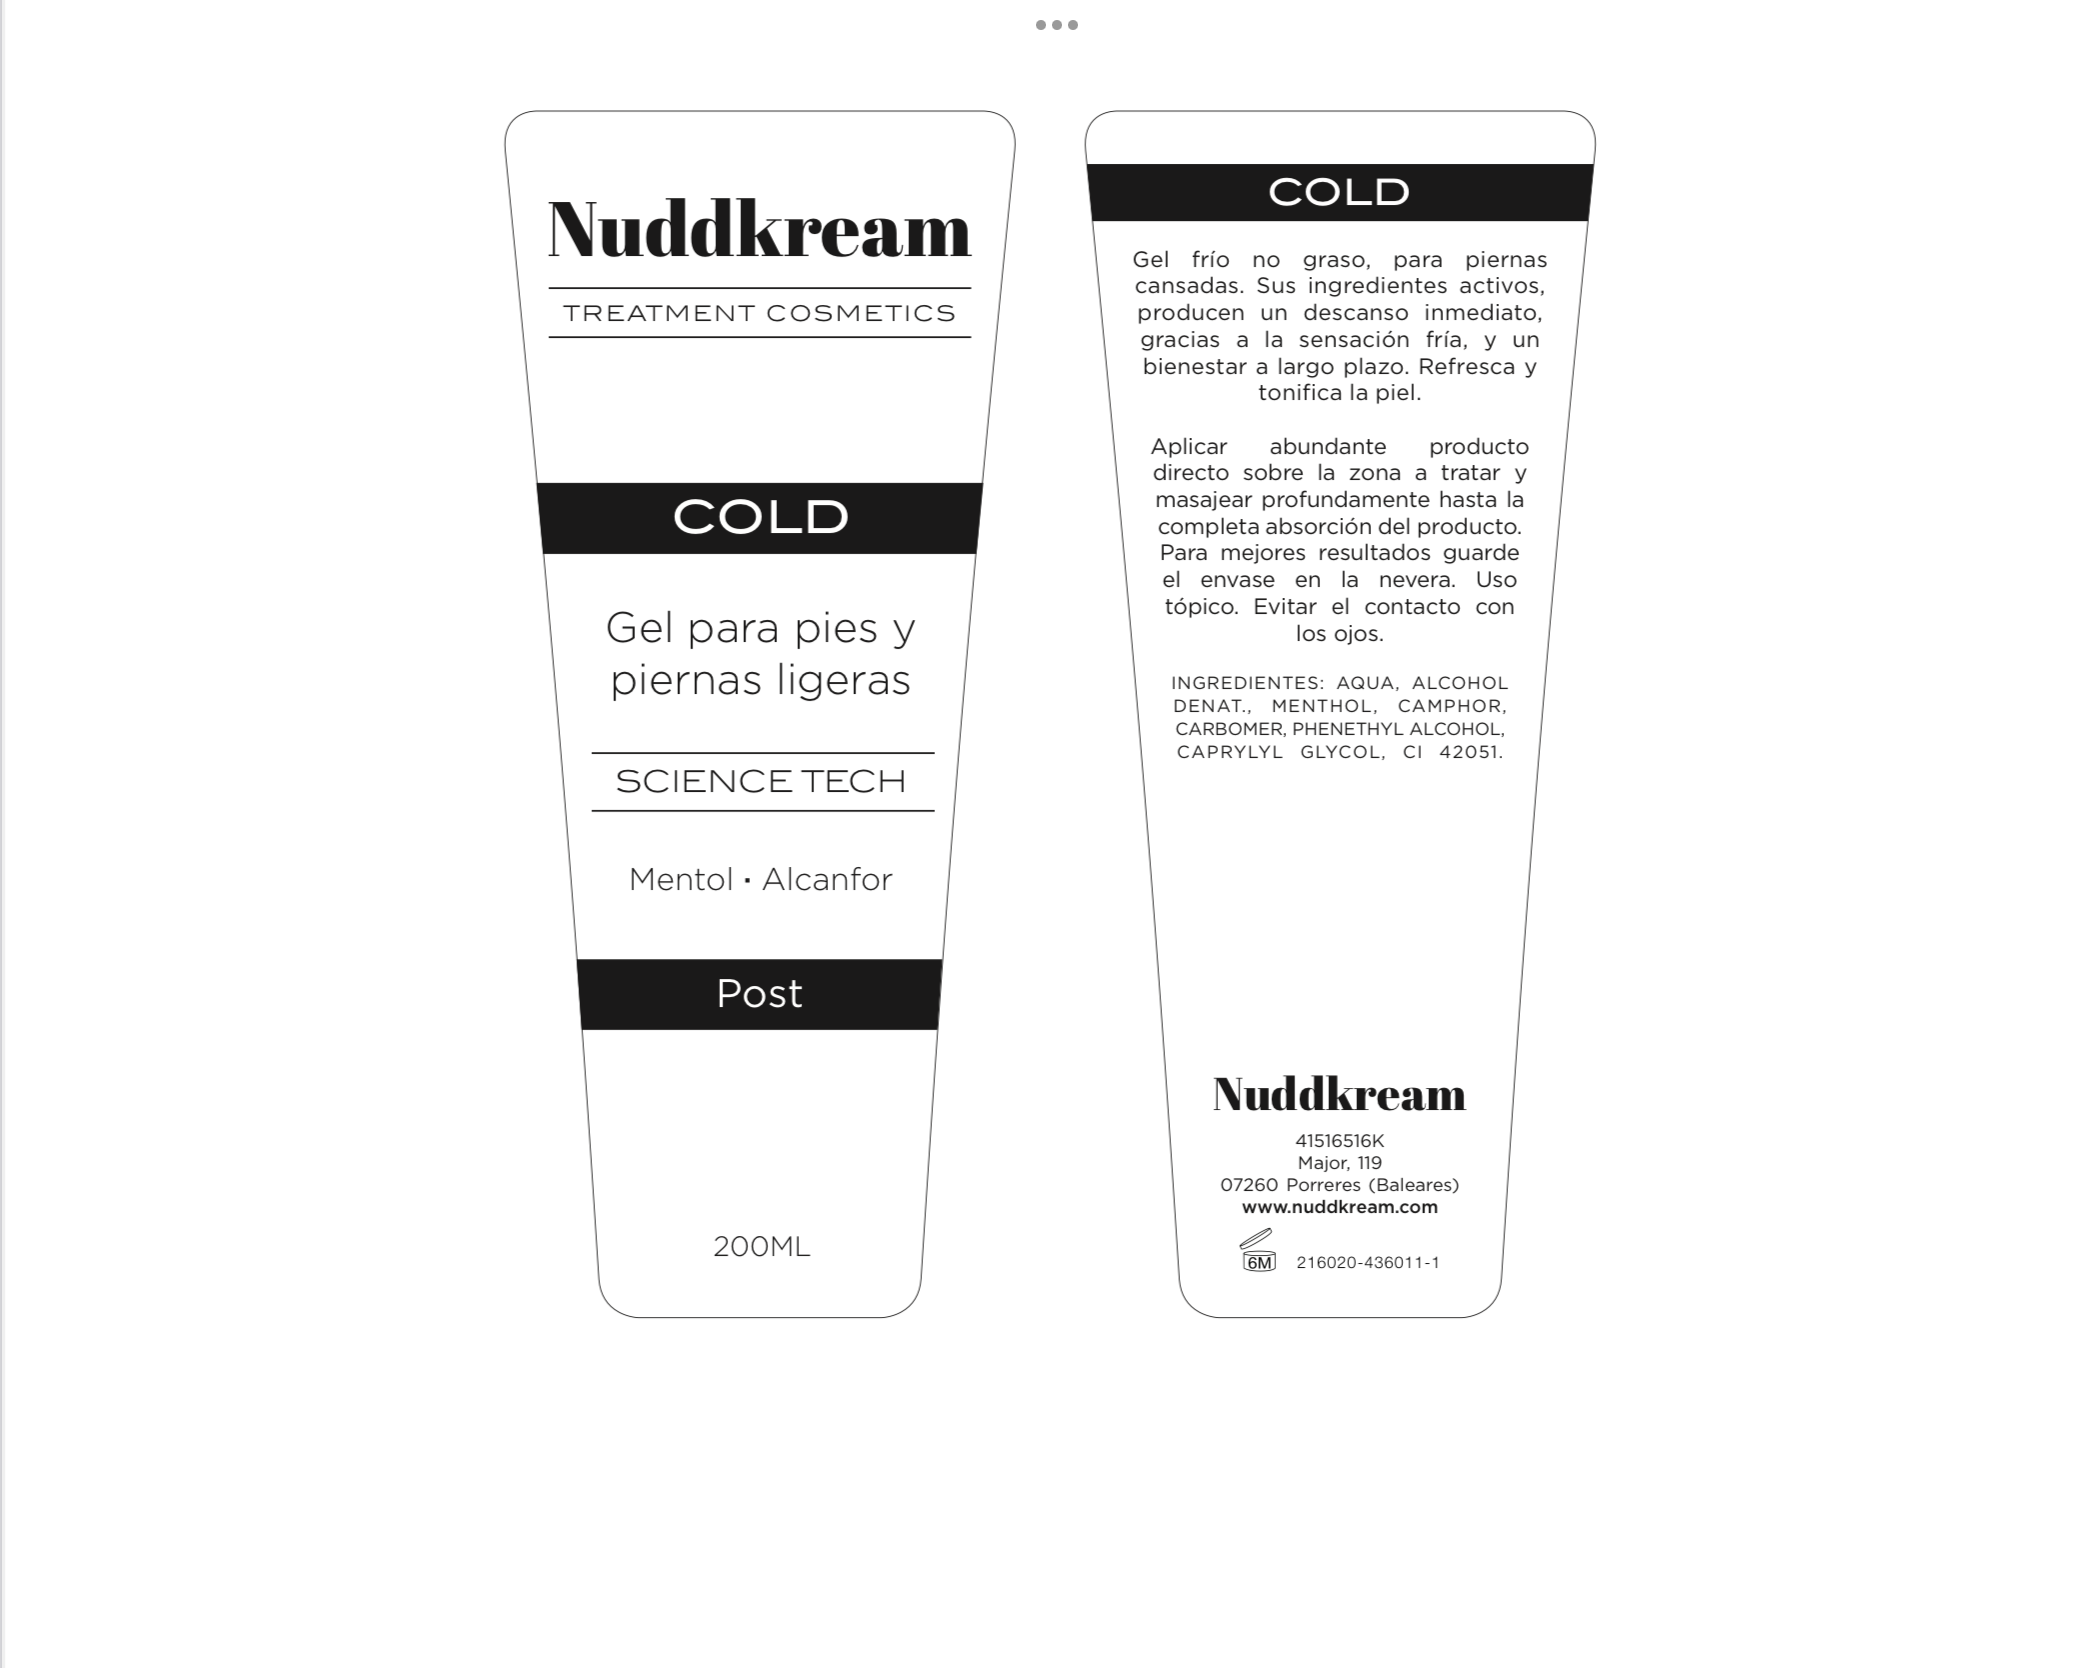 Nuddkream Pack R-Gen y Cold completo